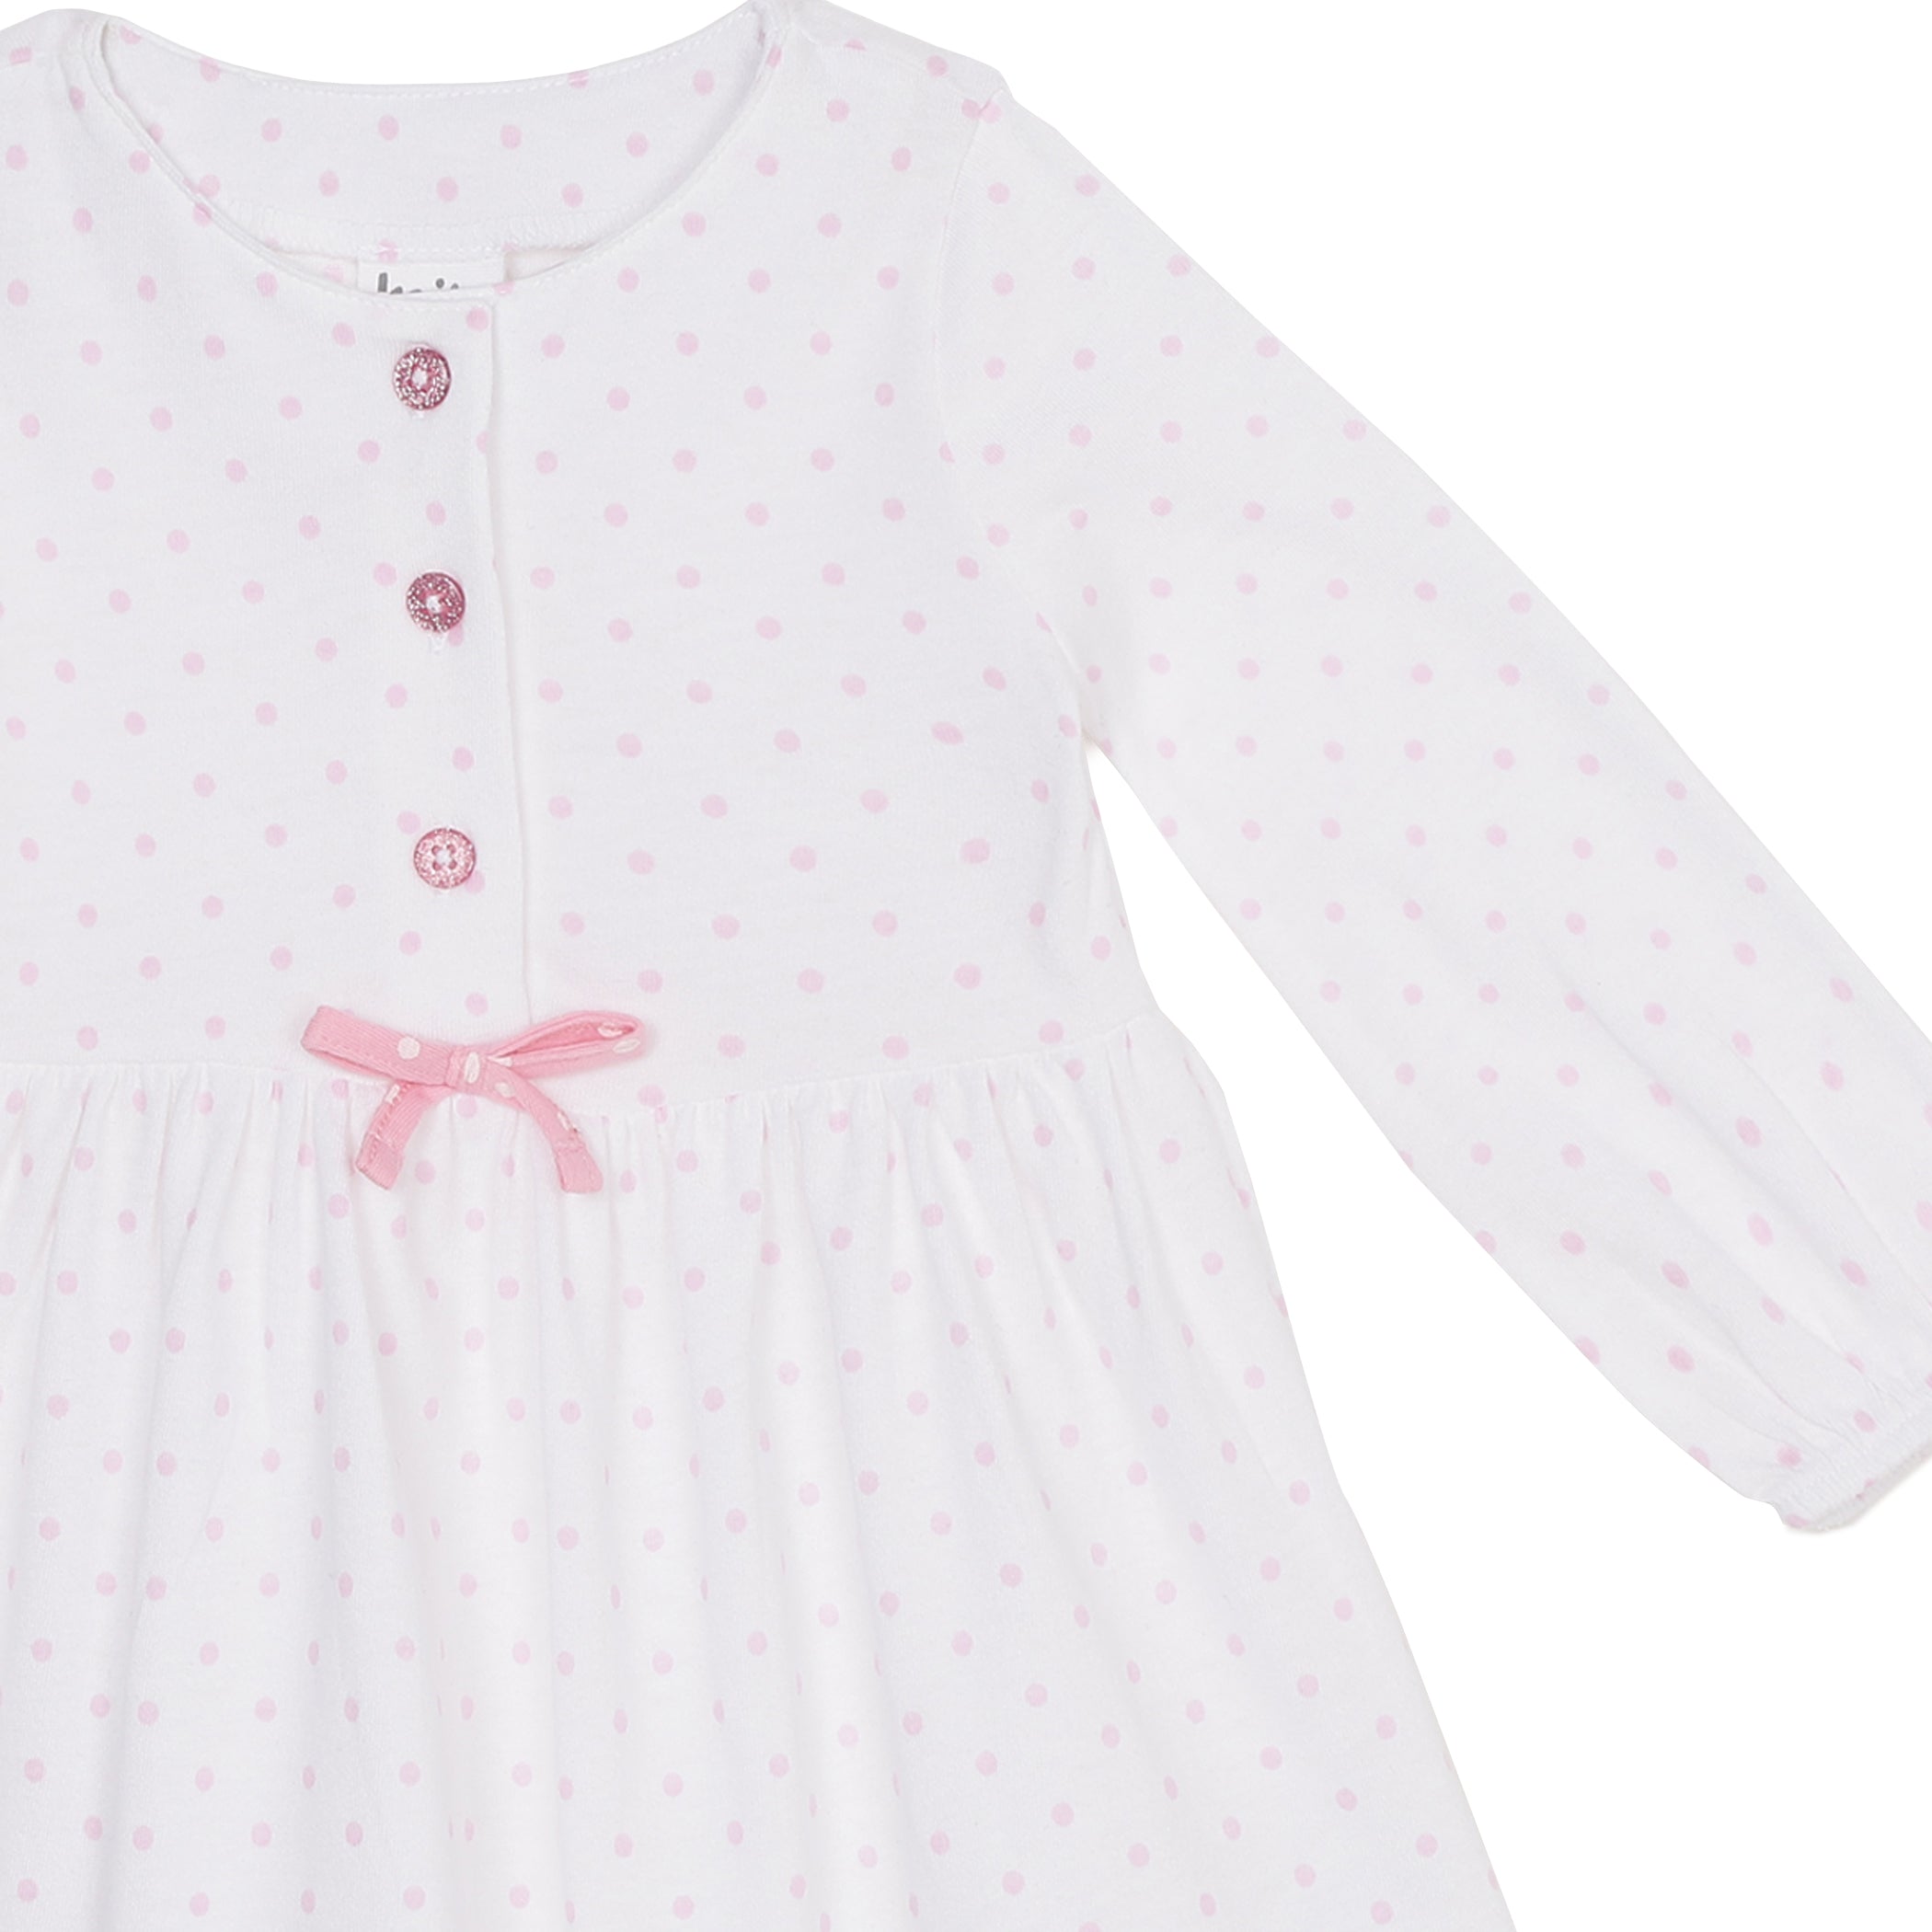 Baby Girls Polka Dot Dress